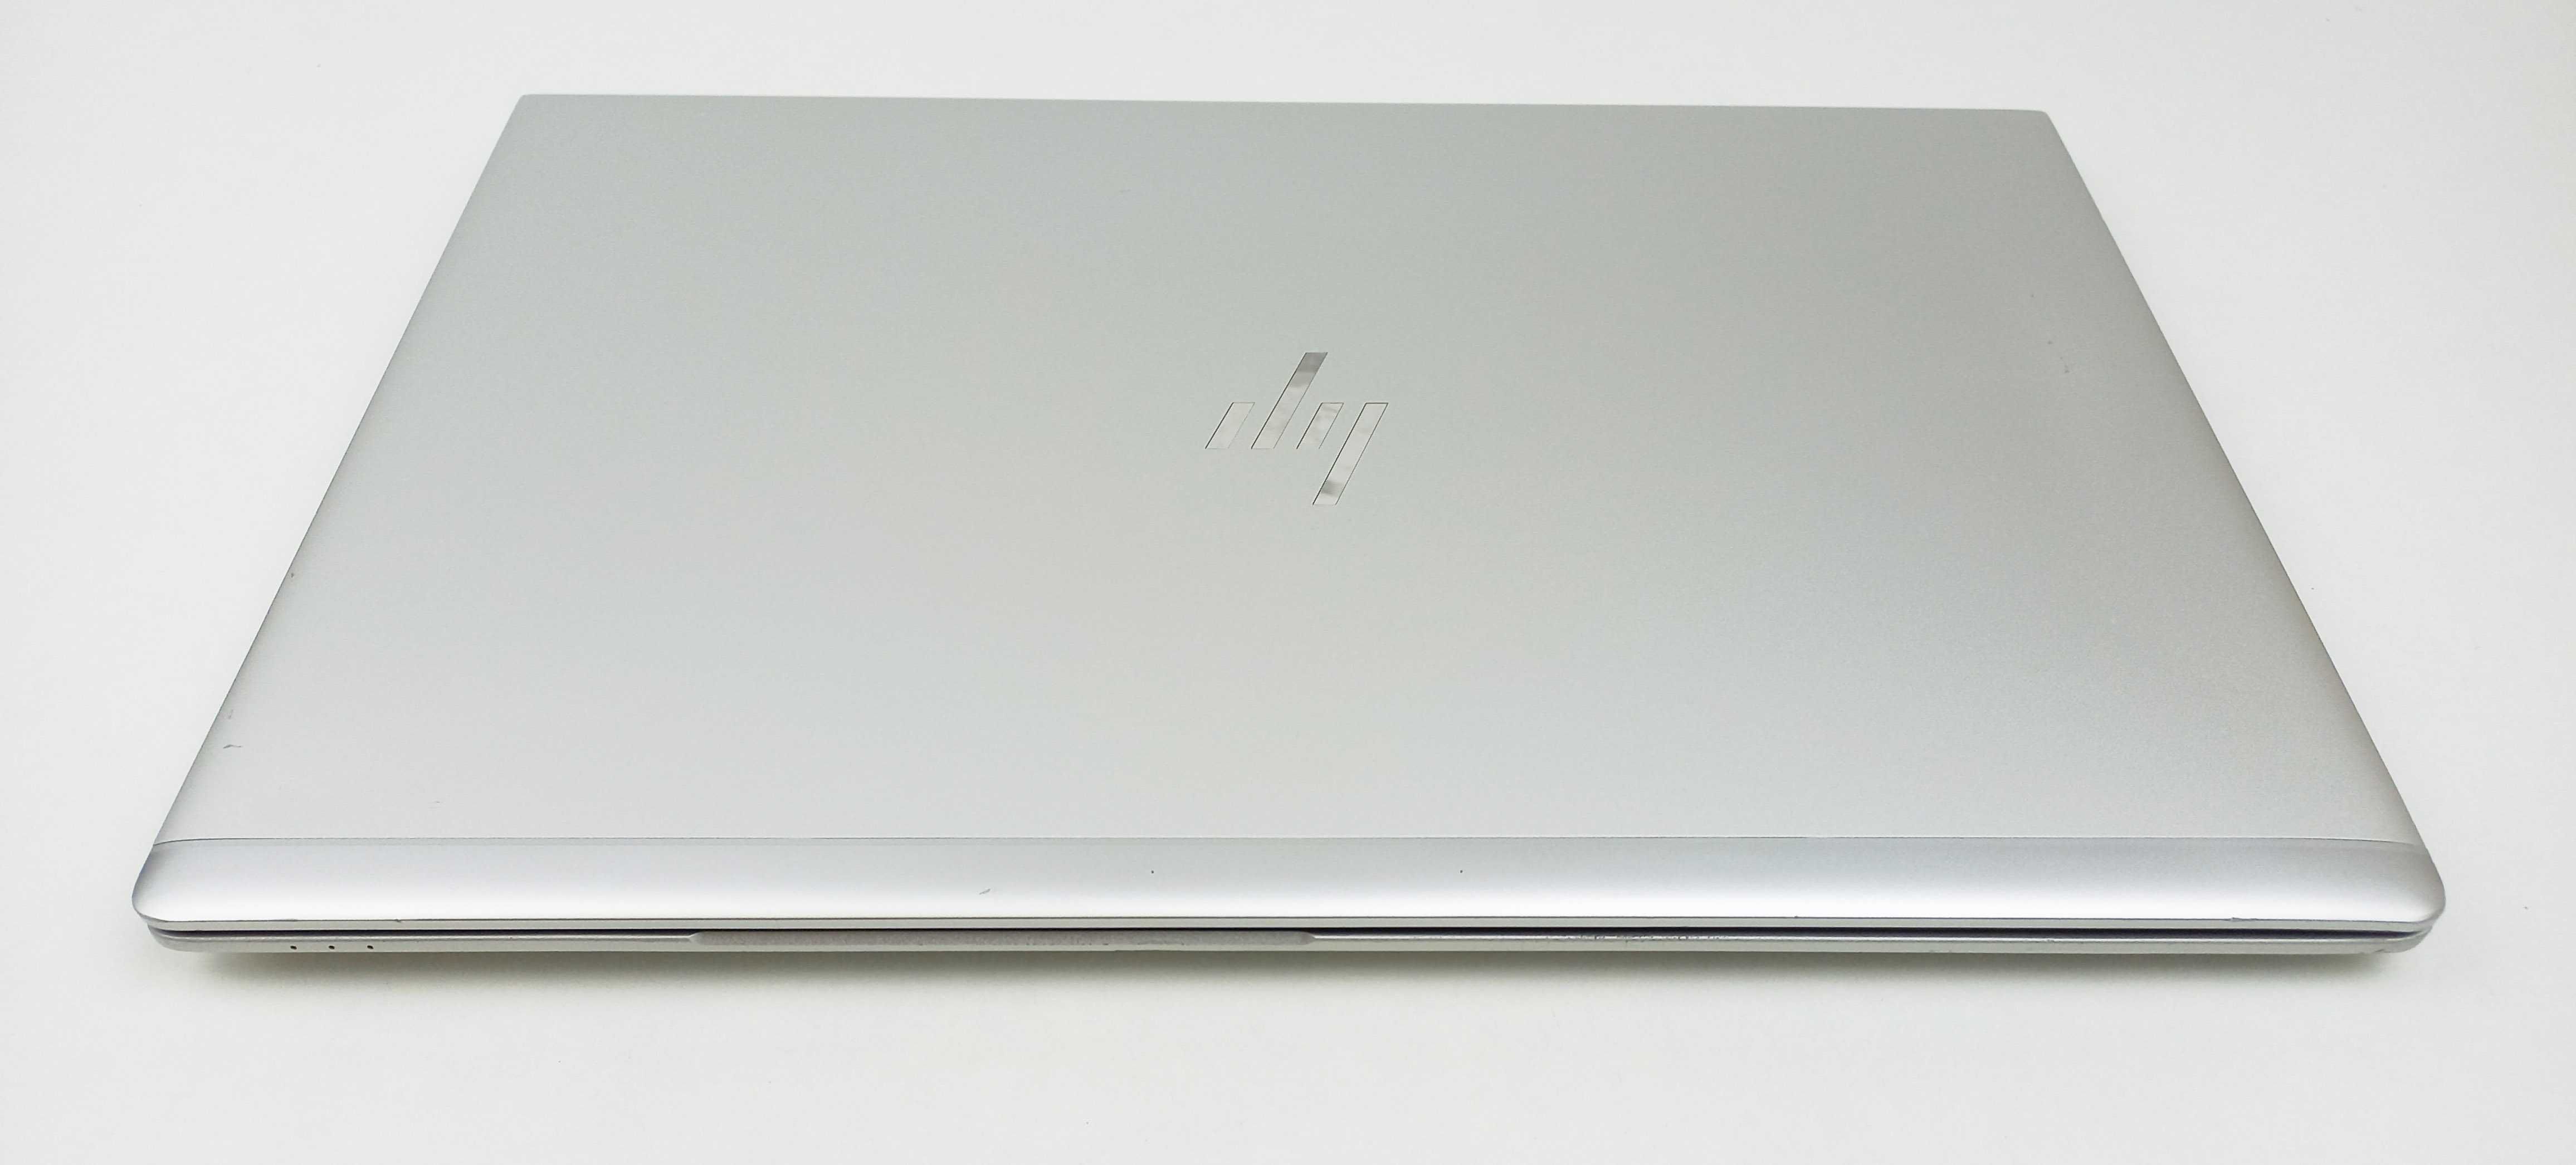 HP EliteBook 850 G5 i7-8550U  8Gb 256Gb  4K IPS